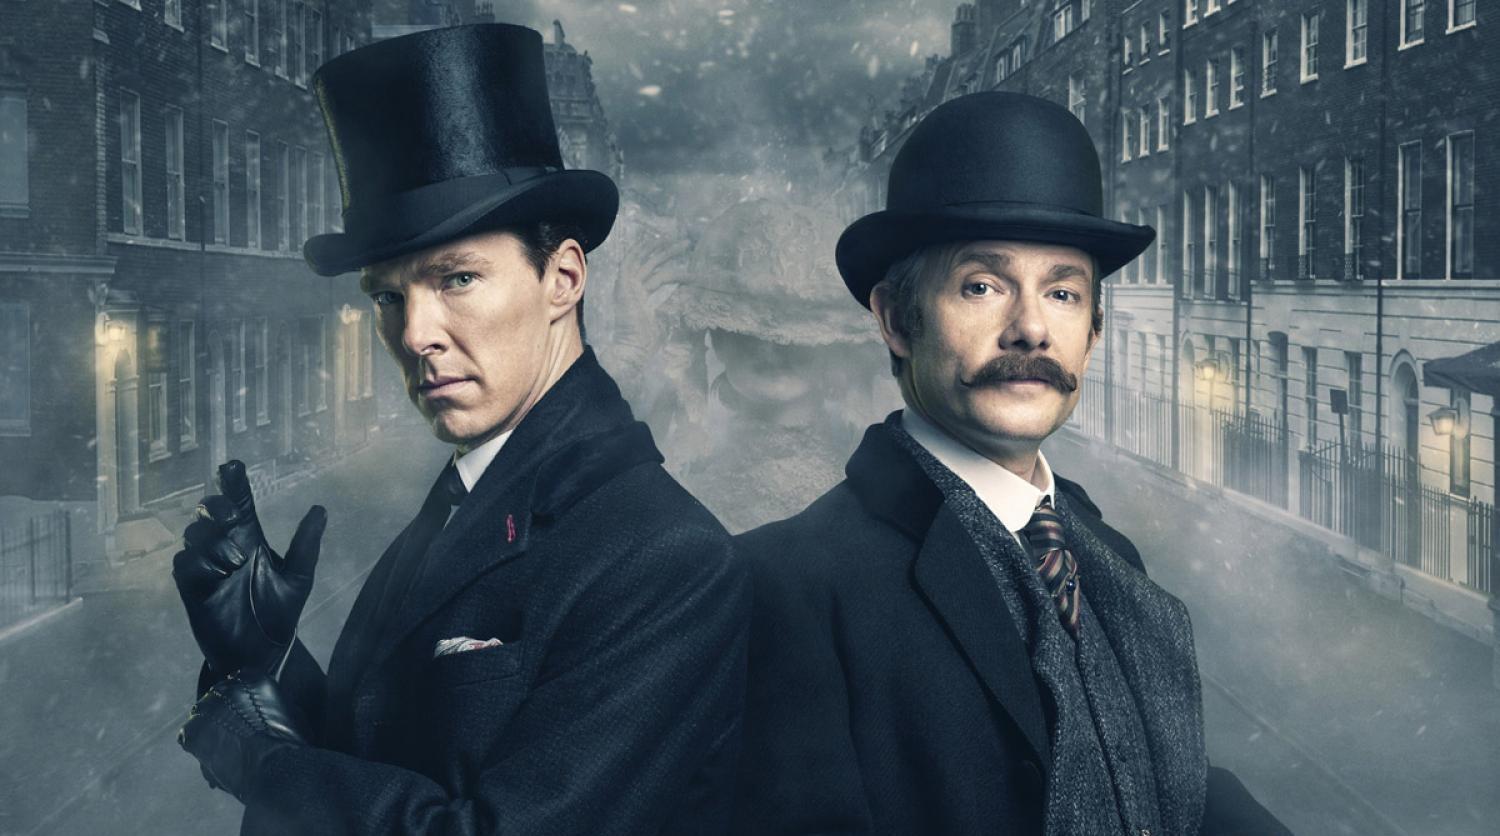 Sherlock e Watson se encontram na Inglaterra vitoriana em novo teaser